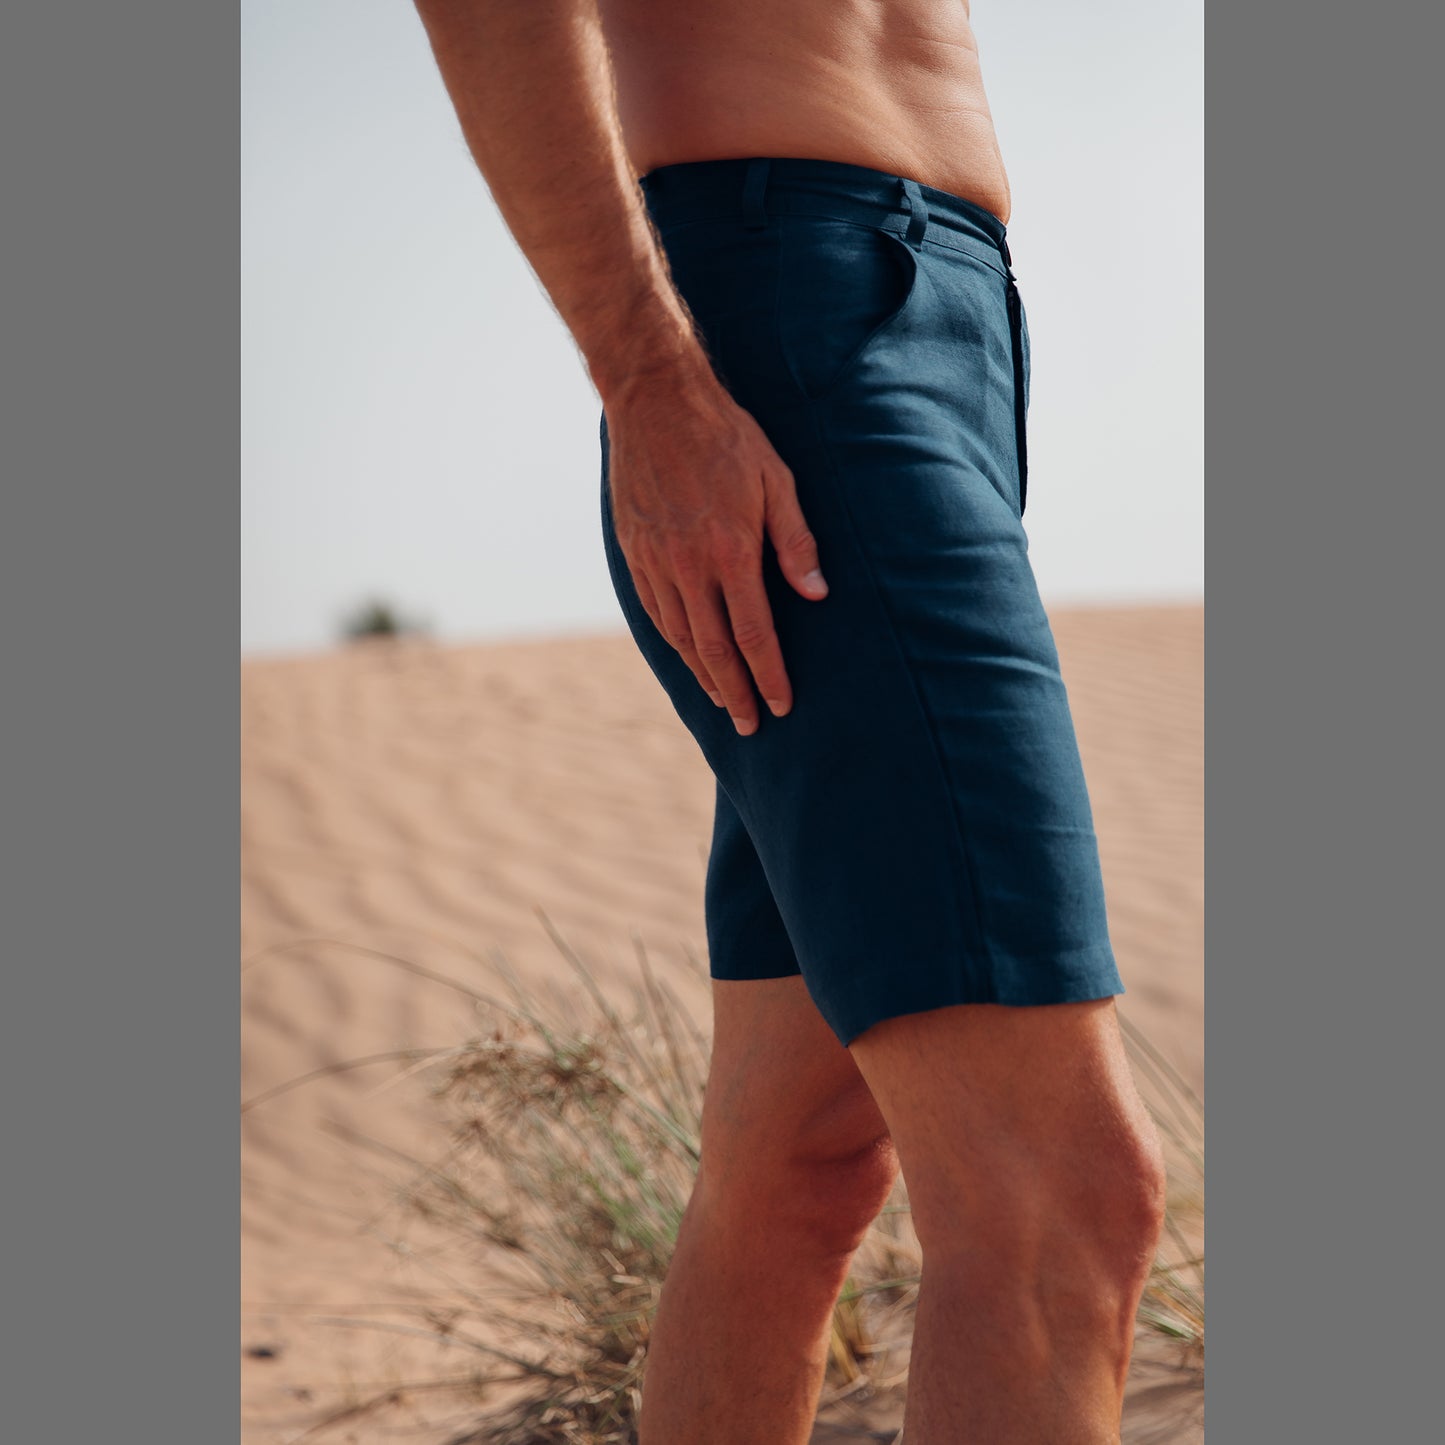 Shorts for Men (100% Hemp, Navy)